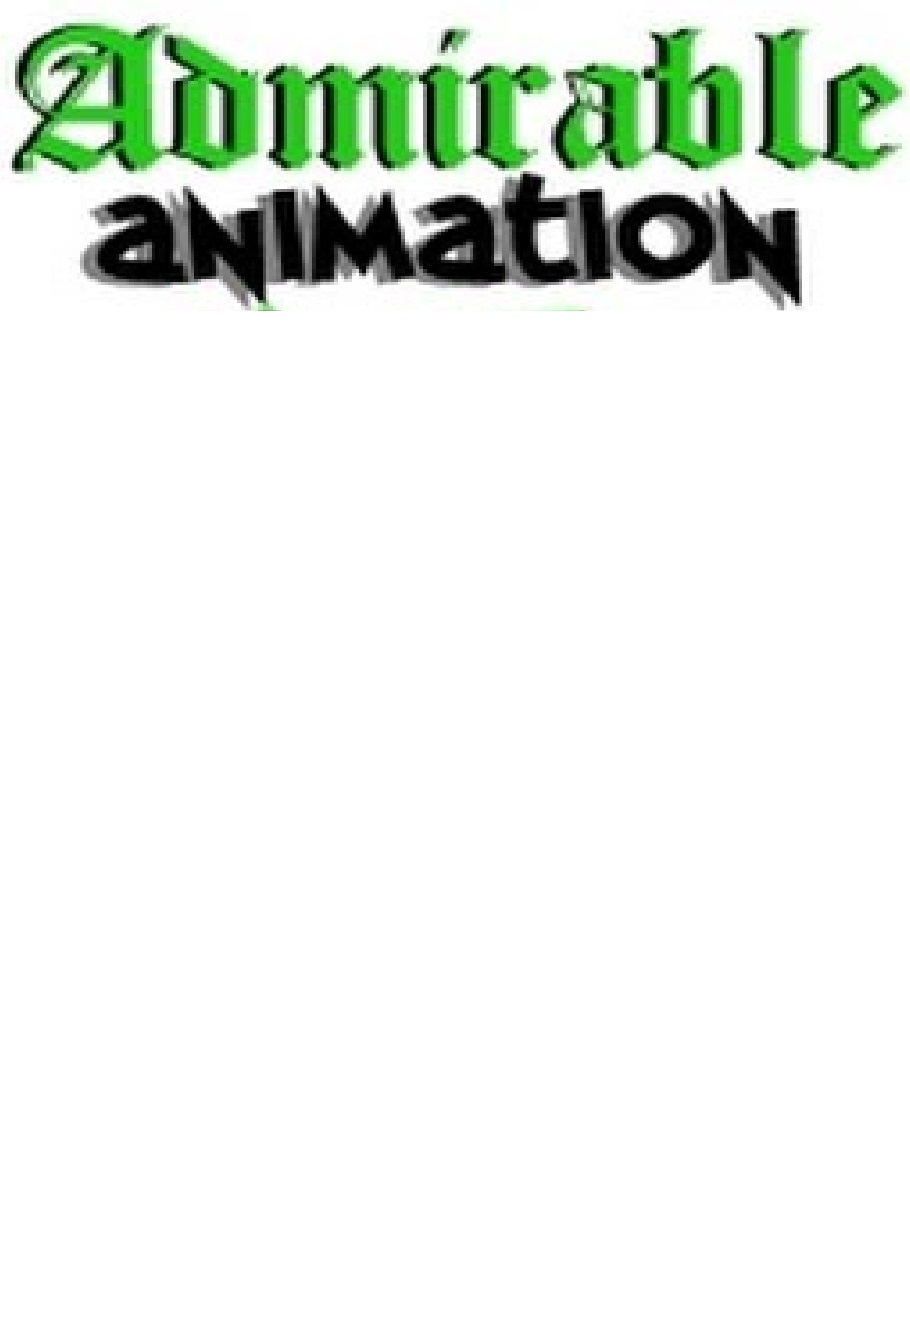 Admirable Animation